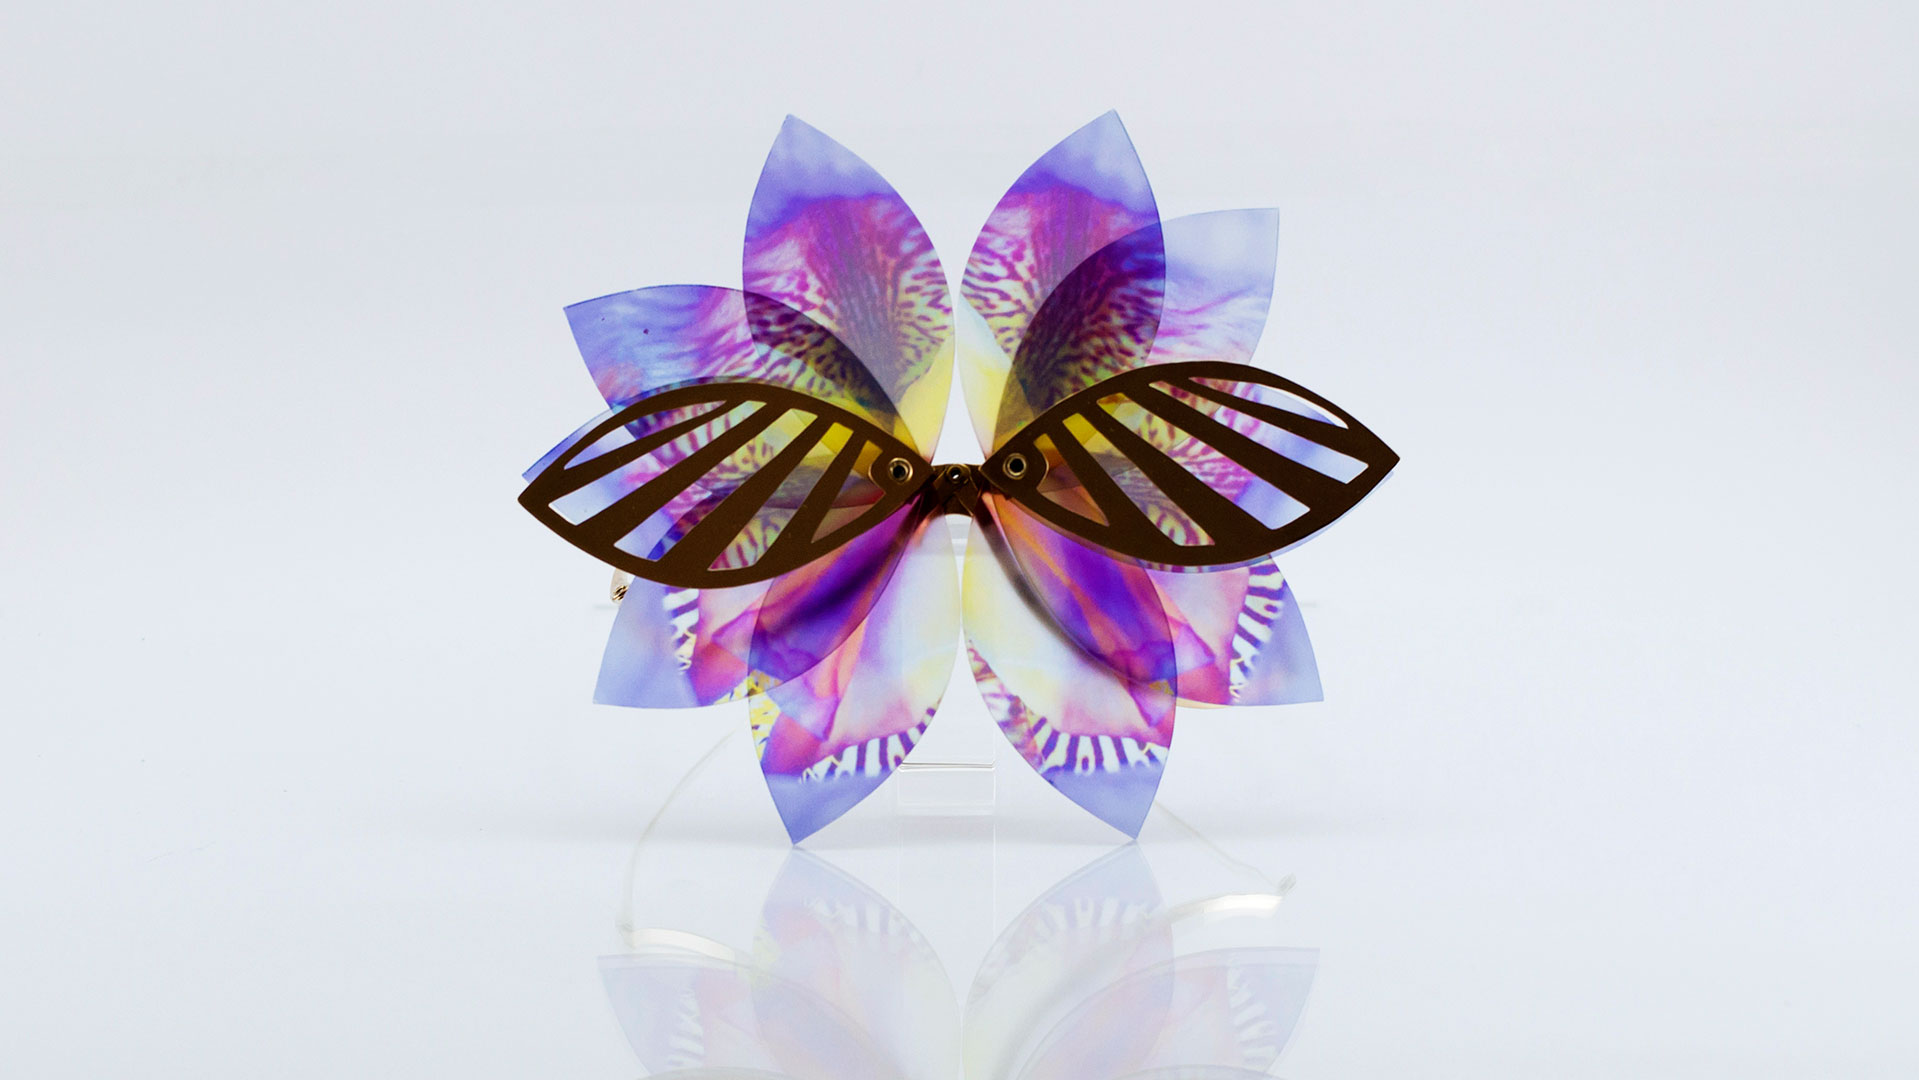 22-blooming-sonja-iglic-eyewear-googles-sunglasses-jewelry-accessories-flower-minimal-secession-kinetic-opening-folding-mechanism-designer-purple-yellow